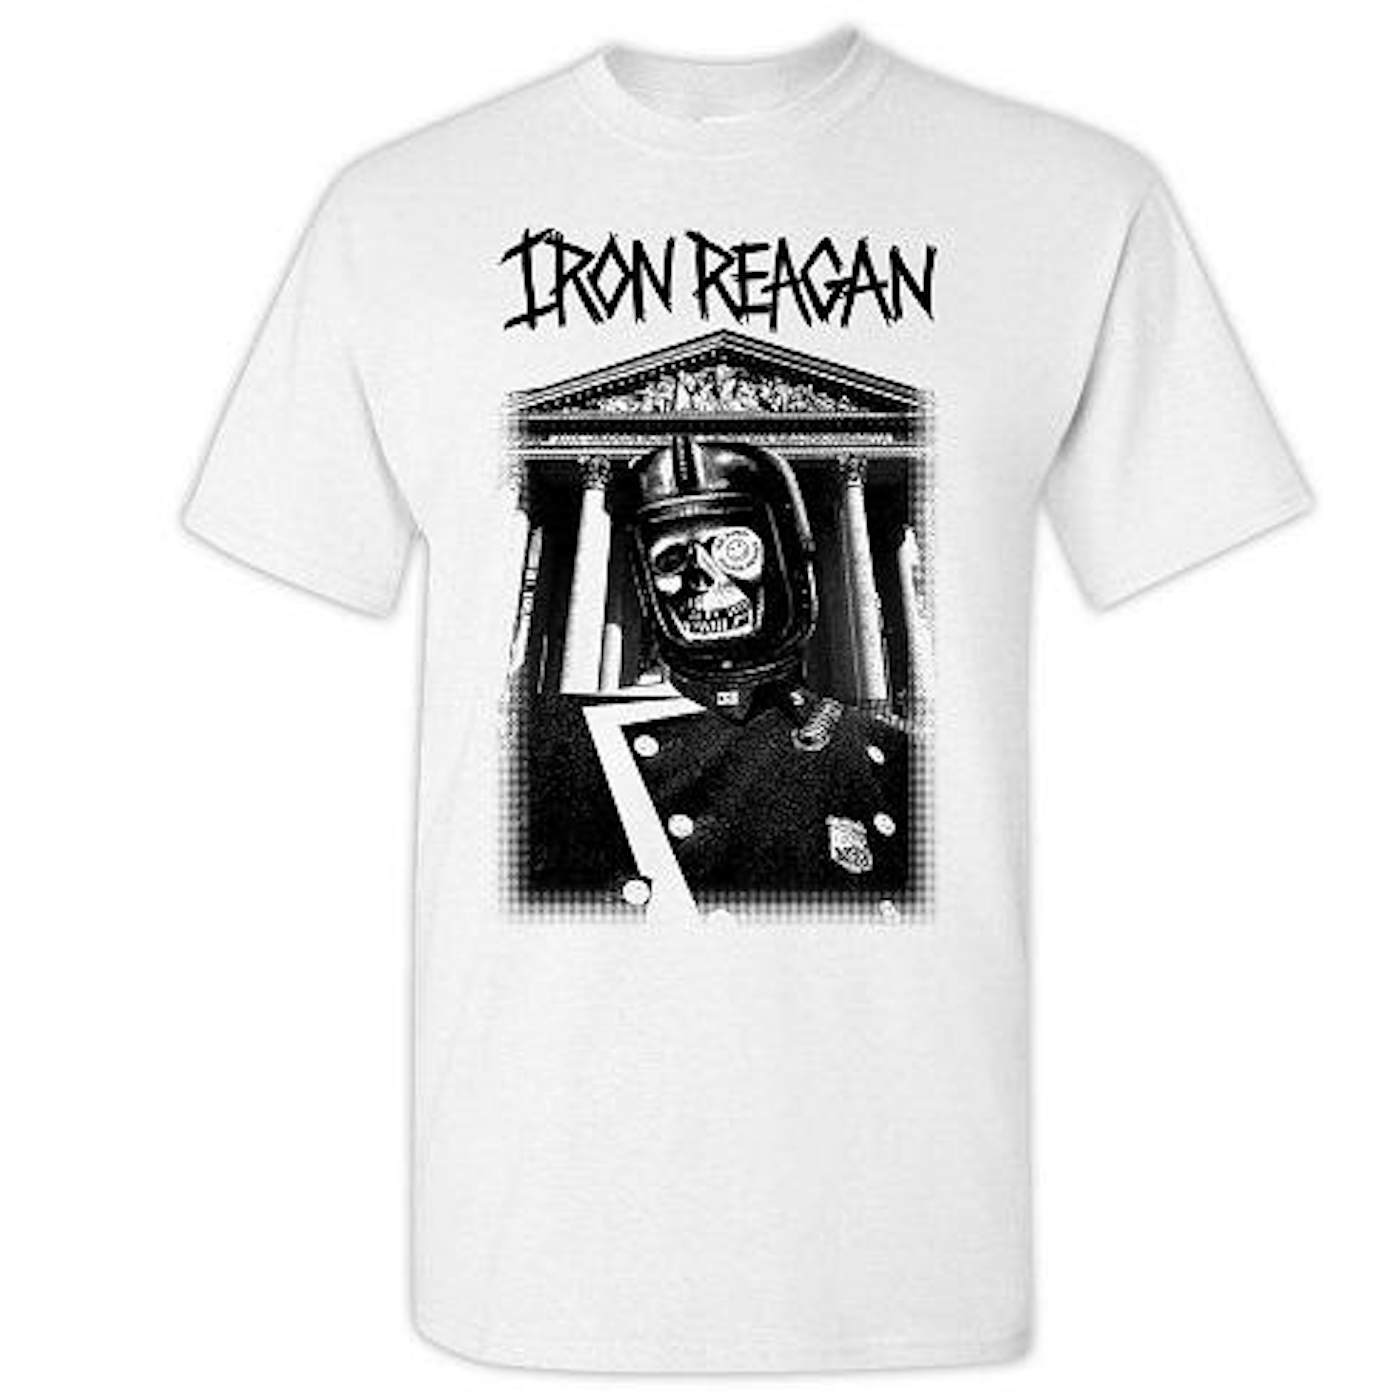 Iron Reagan Rewind Black Ink T-Shirt